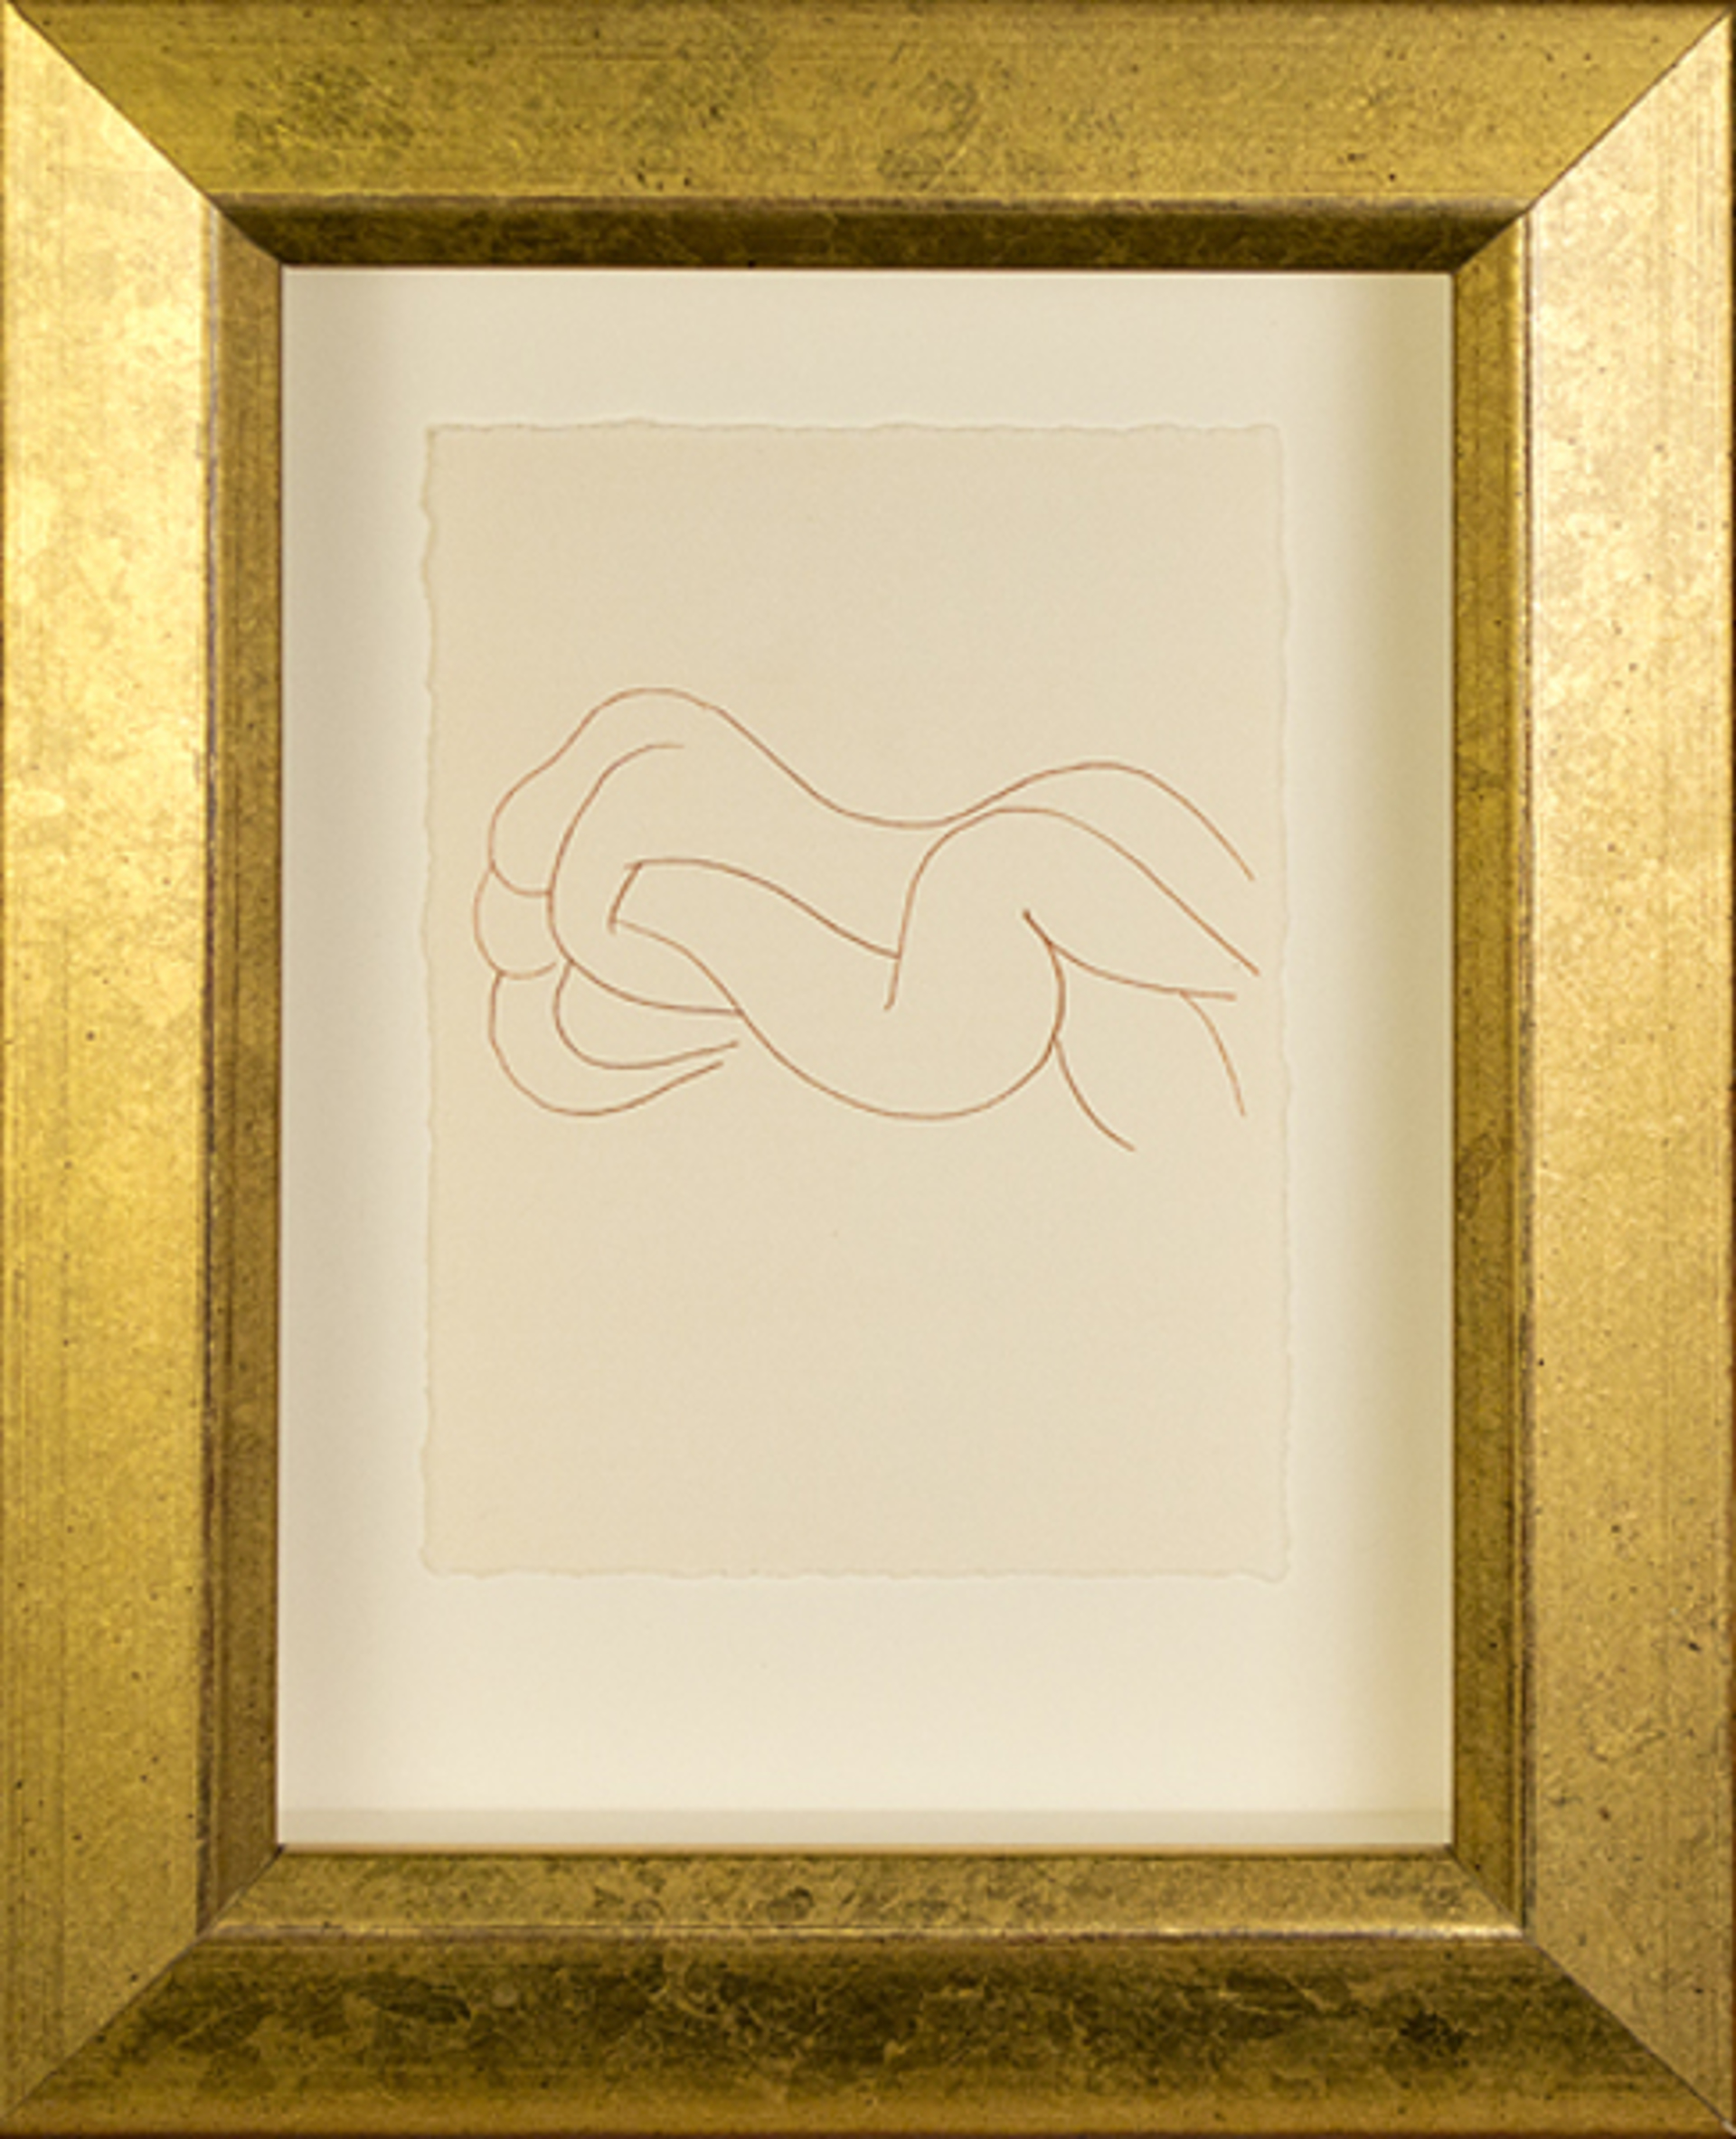 Two Nudes Entwine (from Florilege des Amours de Ronsard Portfolio) by Henri Matisse